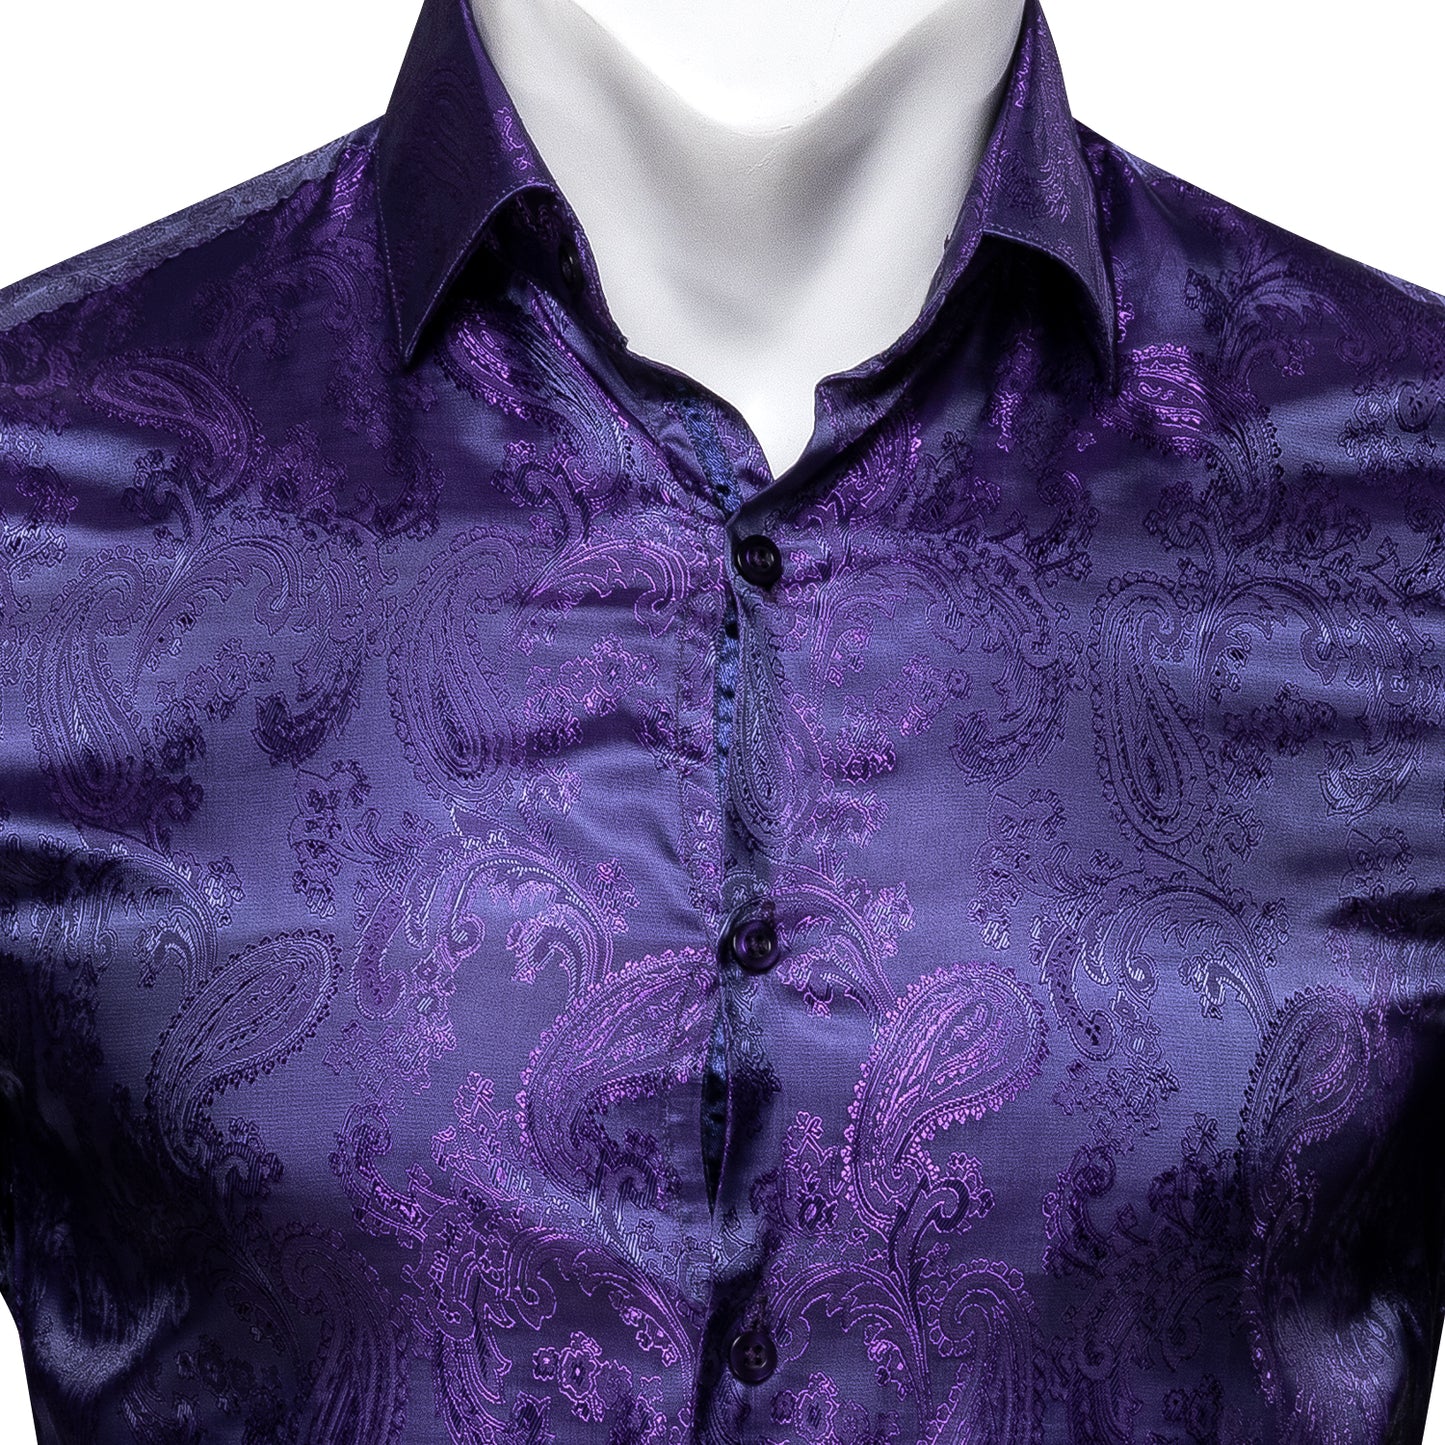 Novelty Silky Shirt - Prussian Paisley I